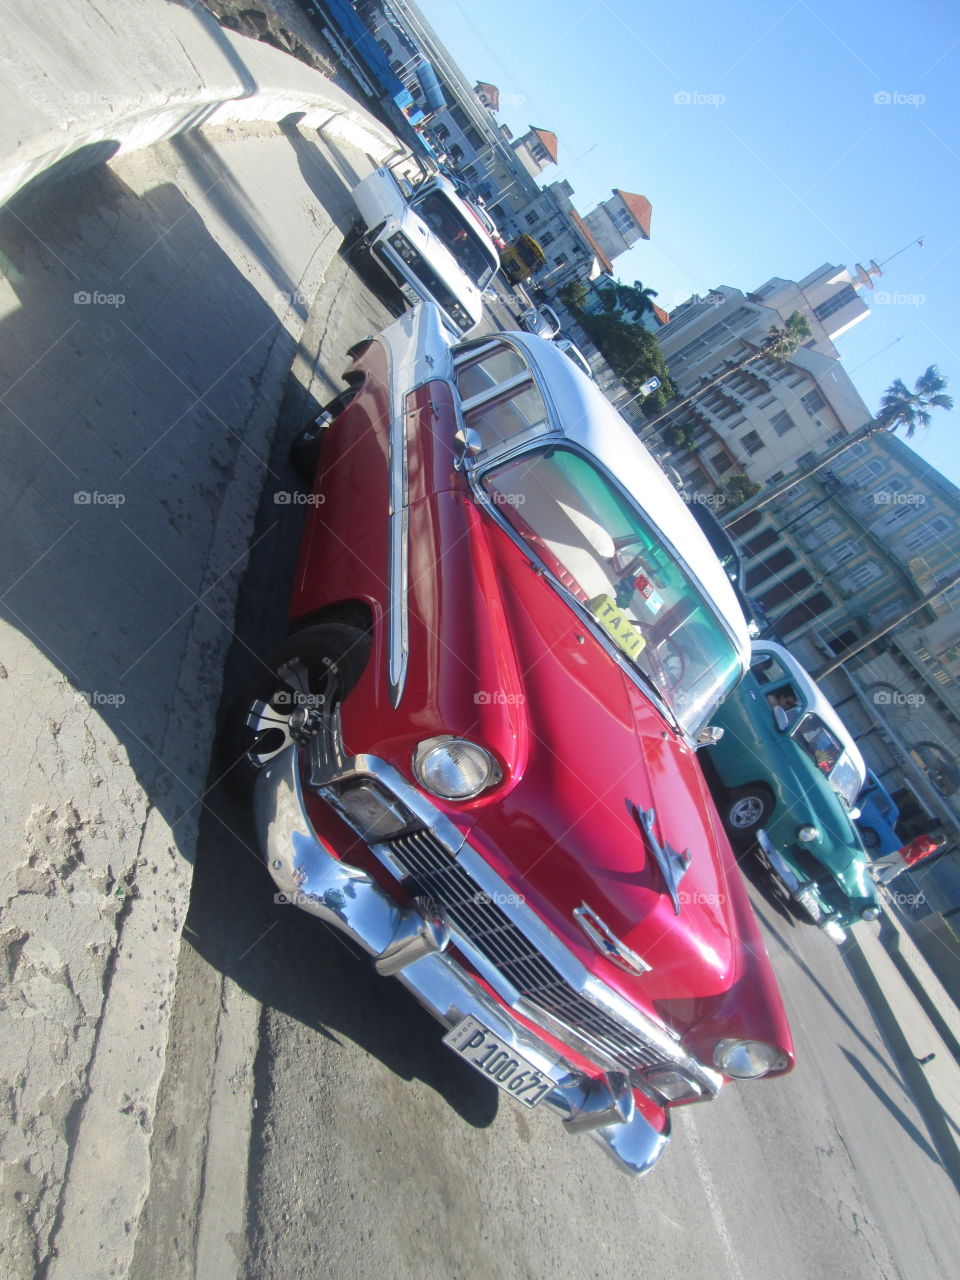 classic red car